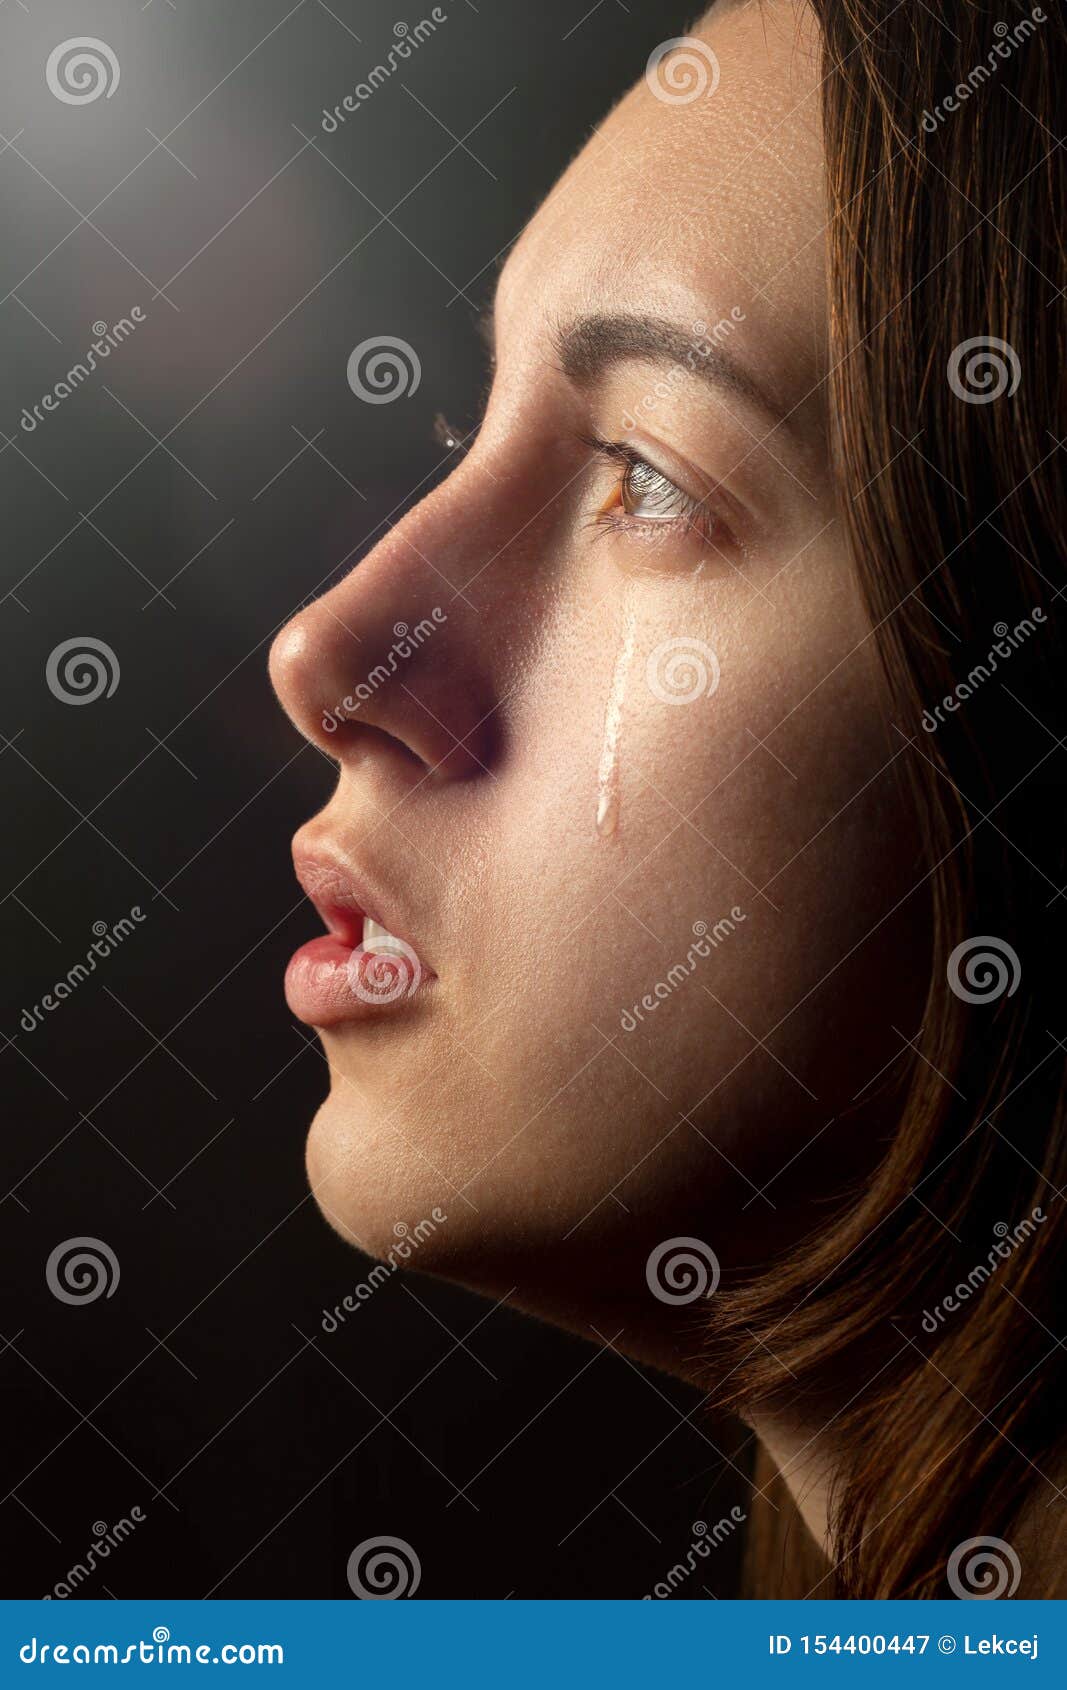 Sad crying girl stock image. Image of light, grief, ethnicity ...